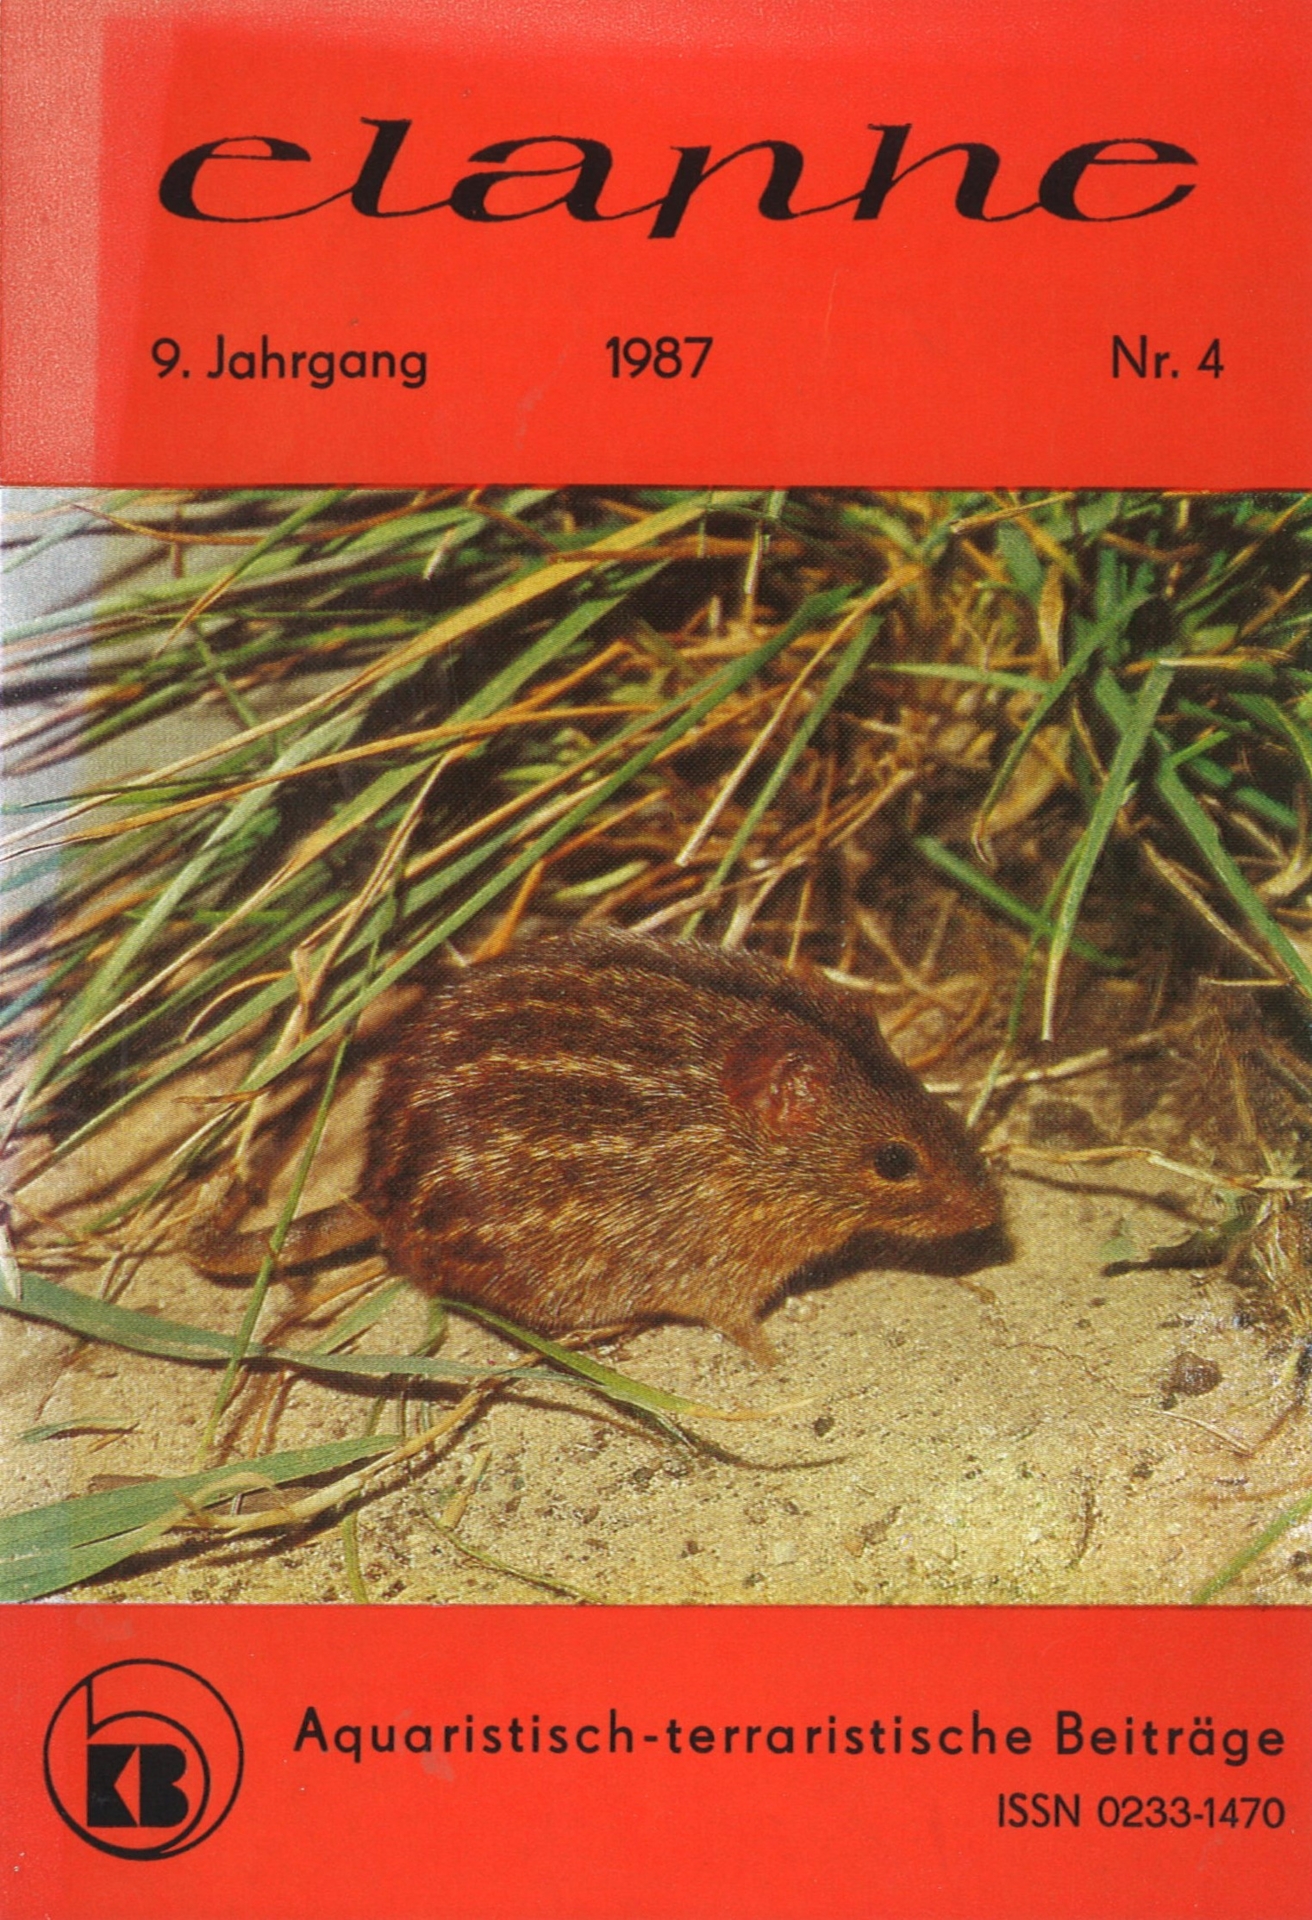 elaphe 1987-4 Titelseite